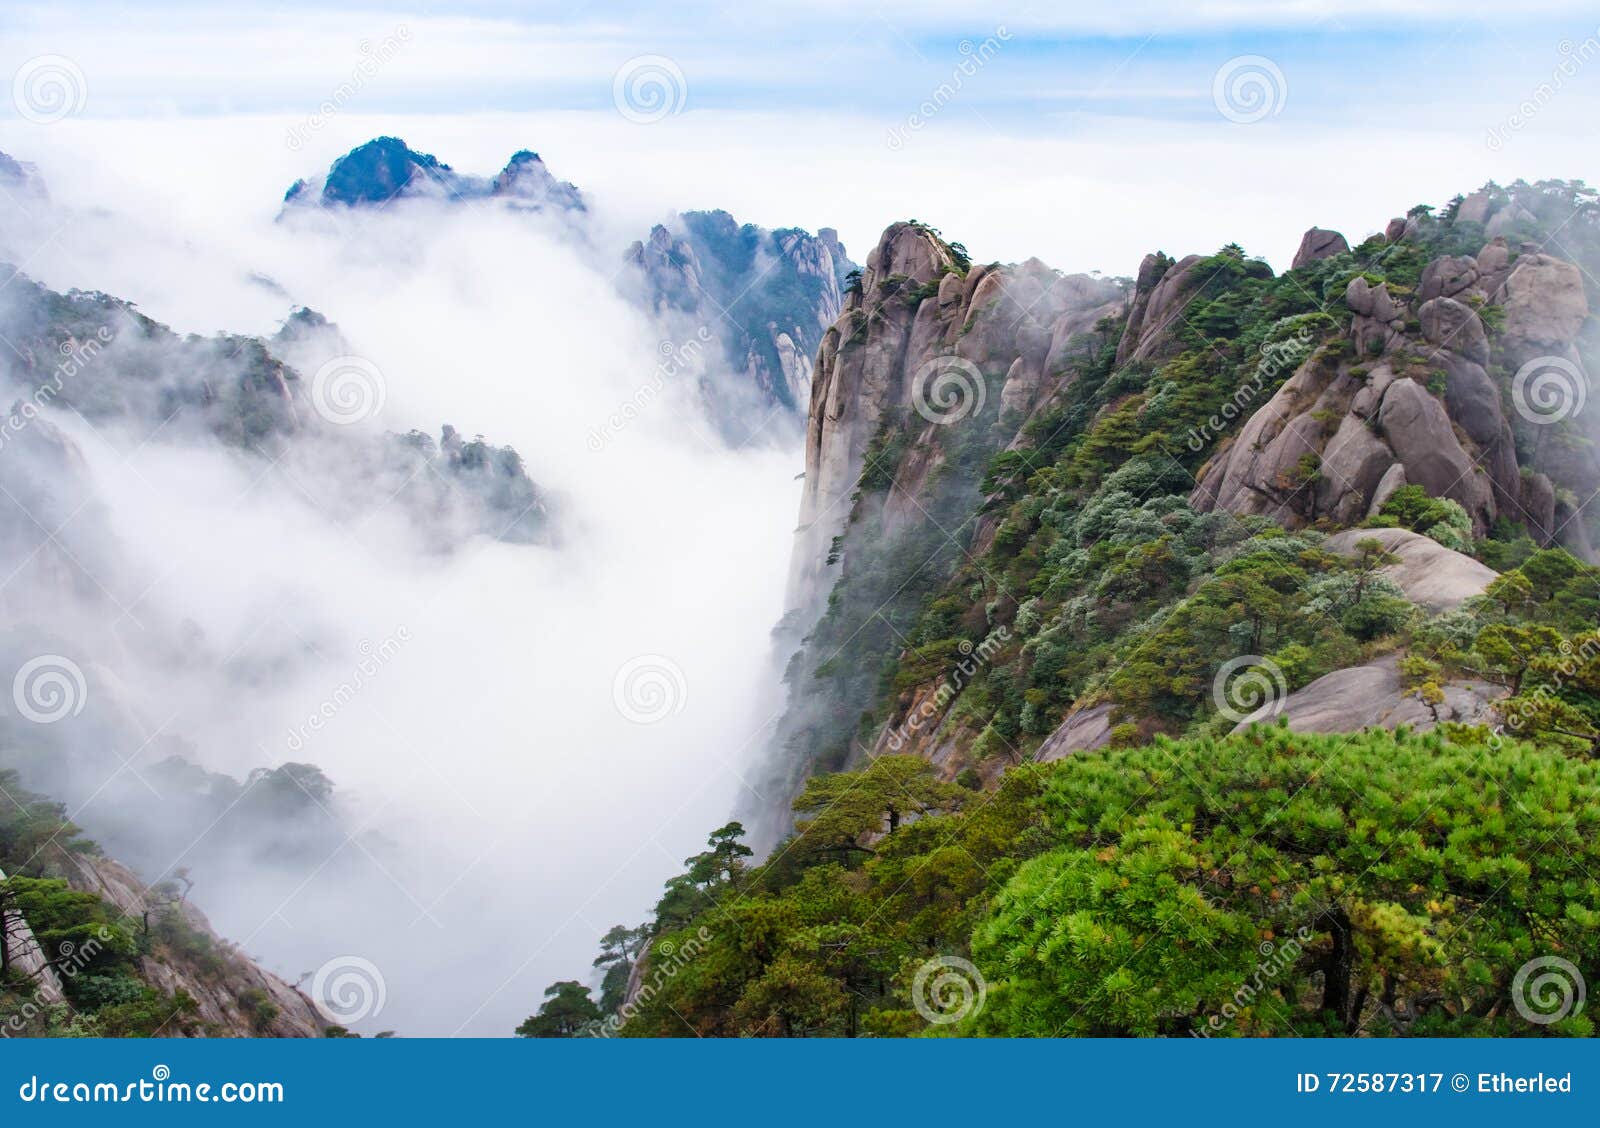 Sanqing Mountain Stock Image Image Of Sanqingshan Tree 72587317